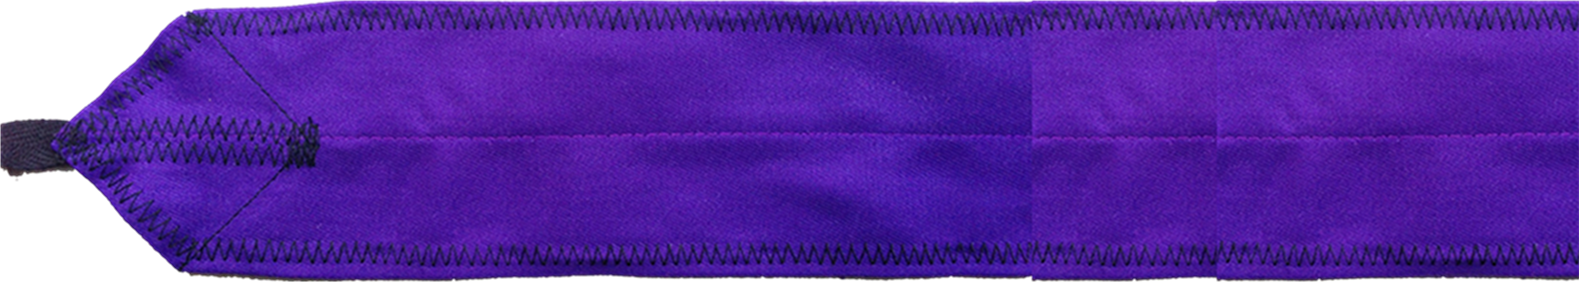 solid purple wrist wraps